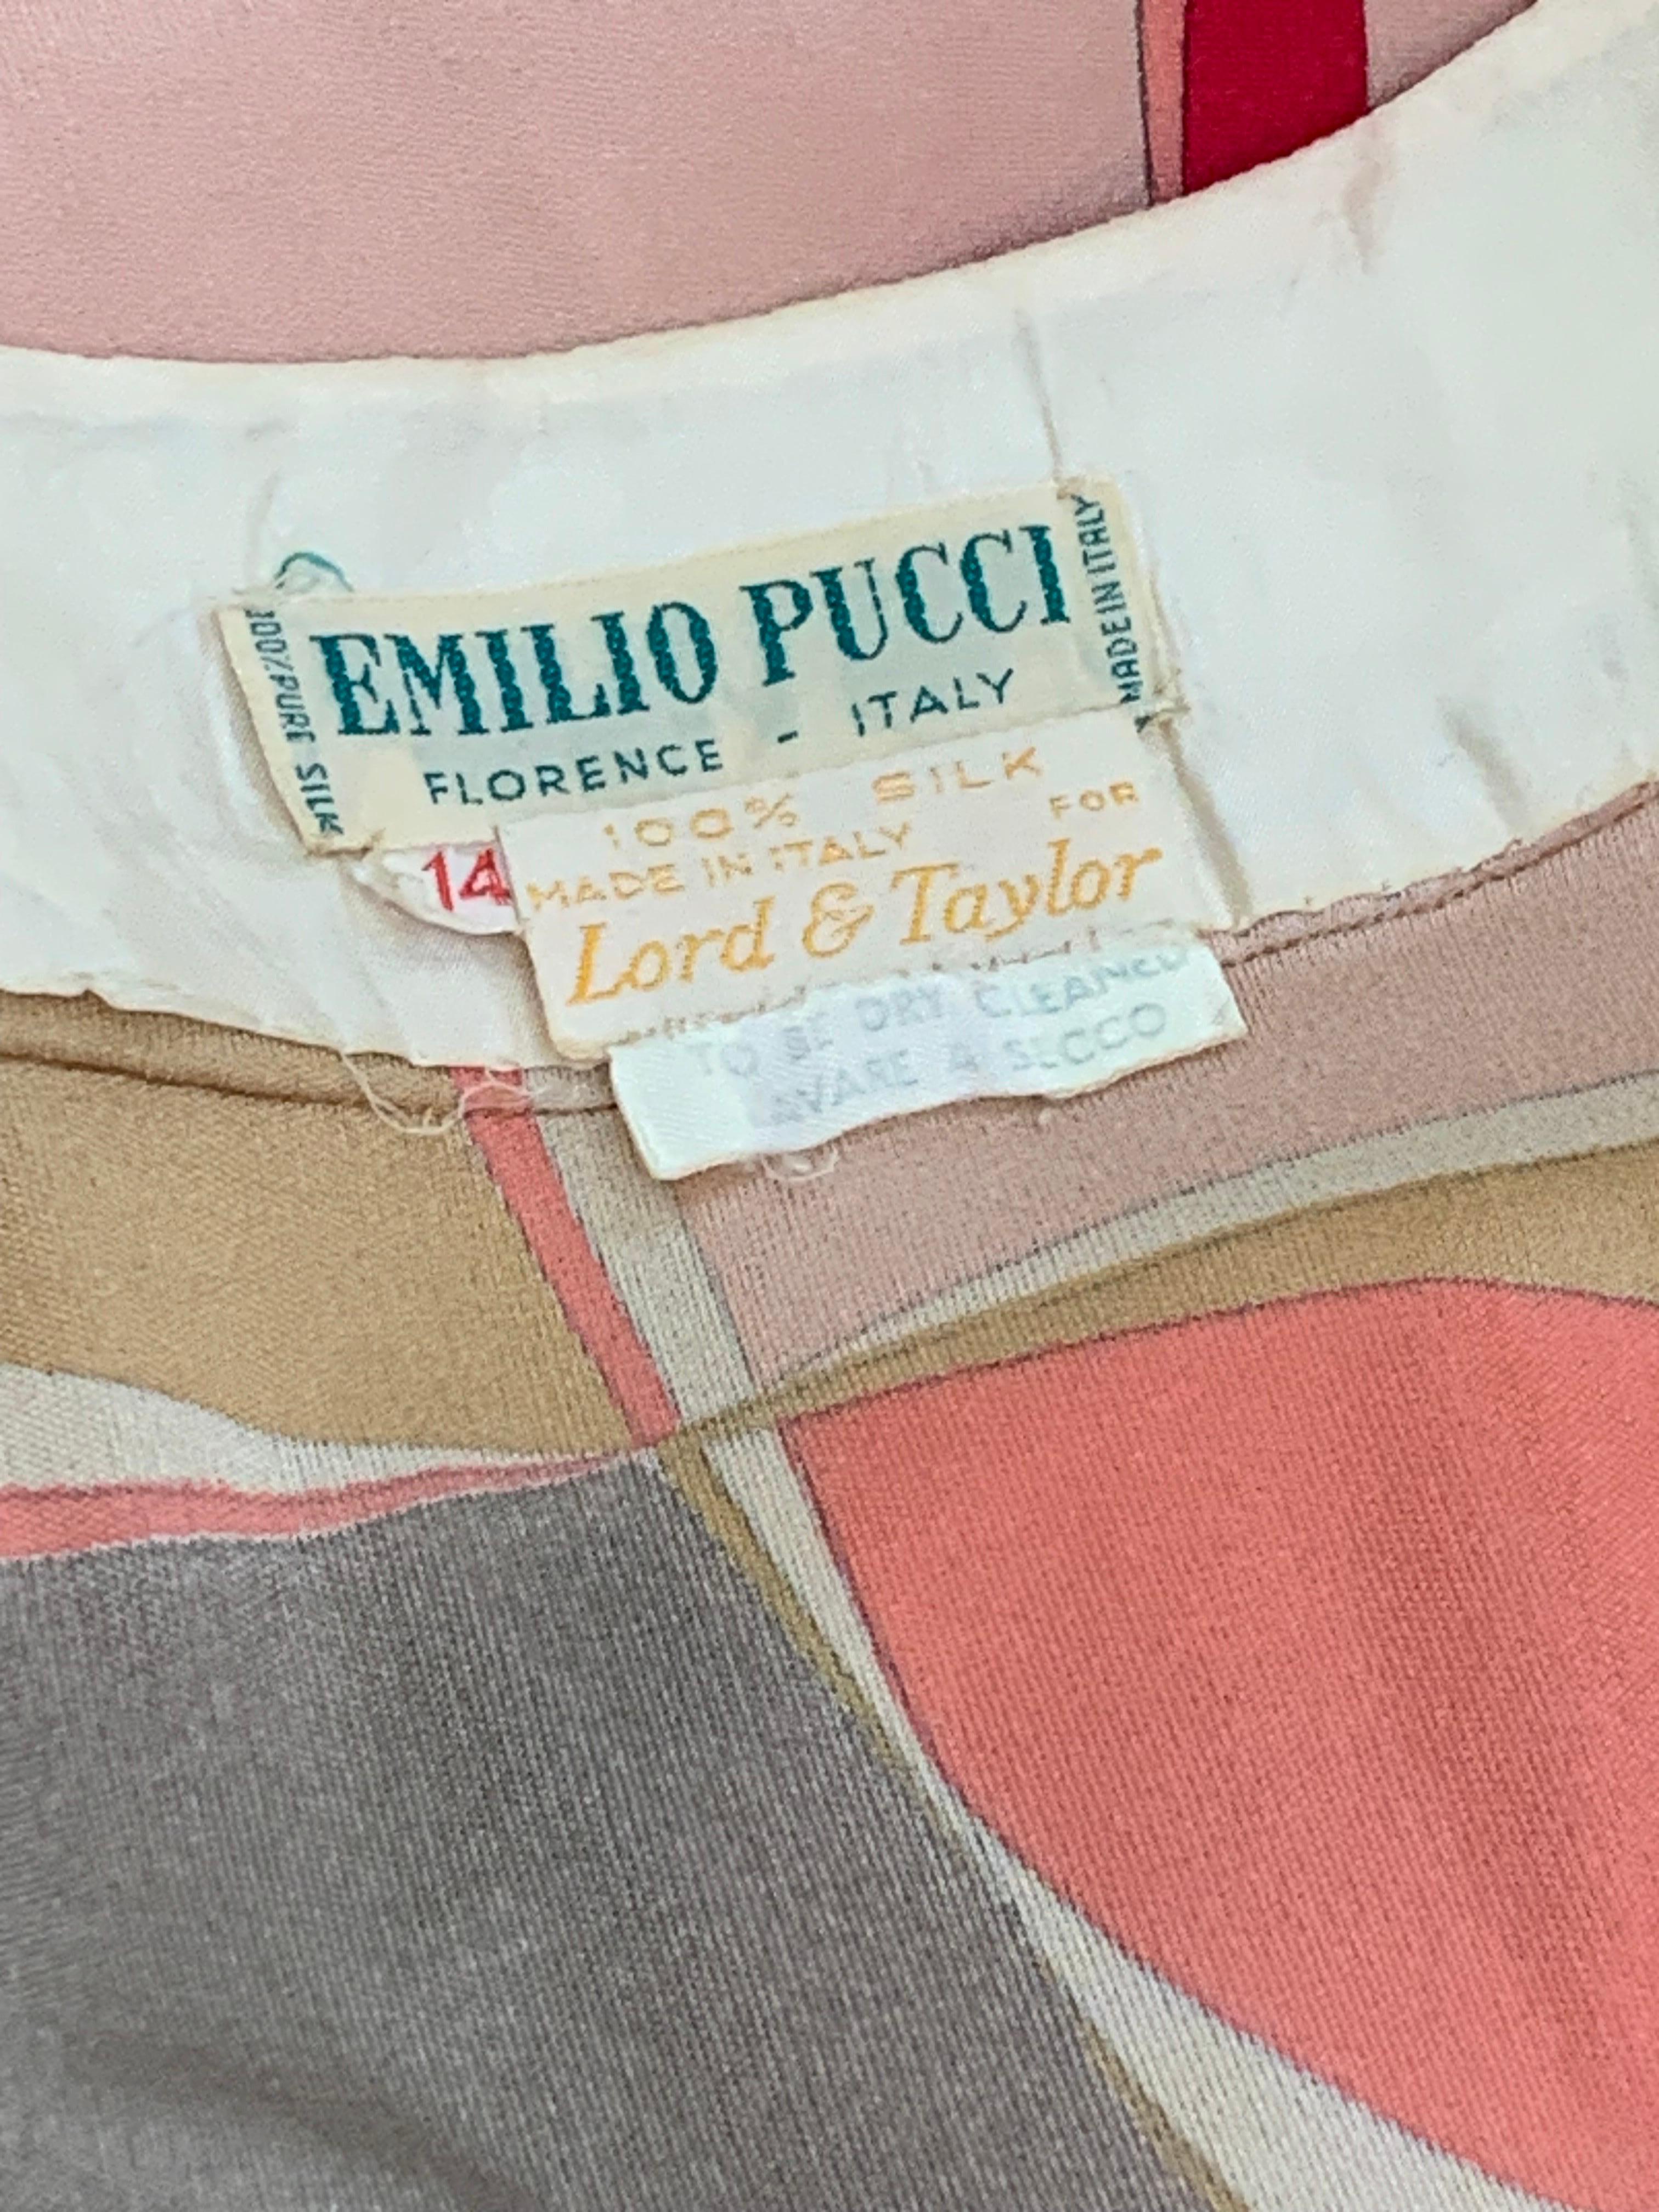 1960s Emilio Pucci Silk Jersey Maxi Dress Contoured Bodice in Peach Taupe Coral For Sale 13